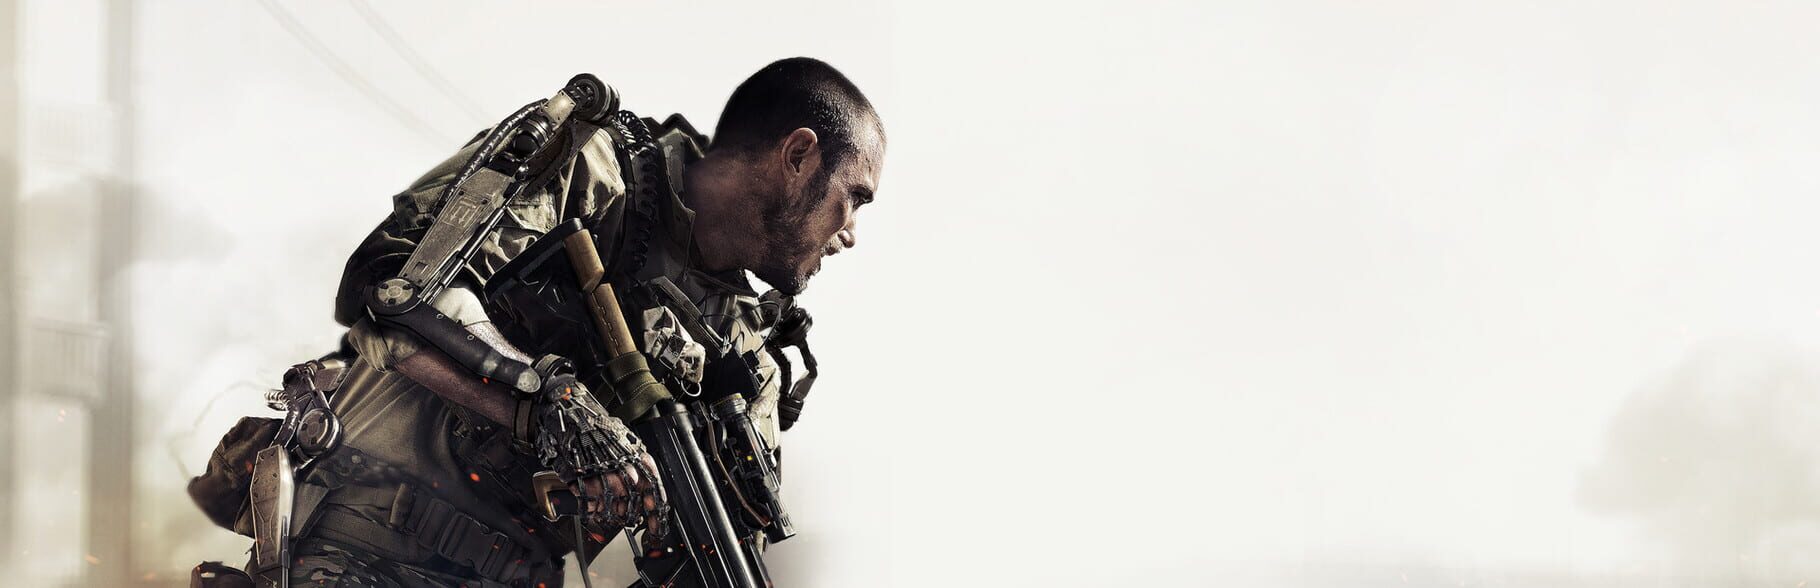 Artwork for Call of Duty: Advanced Warfare